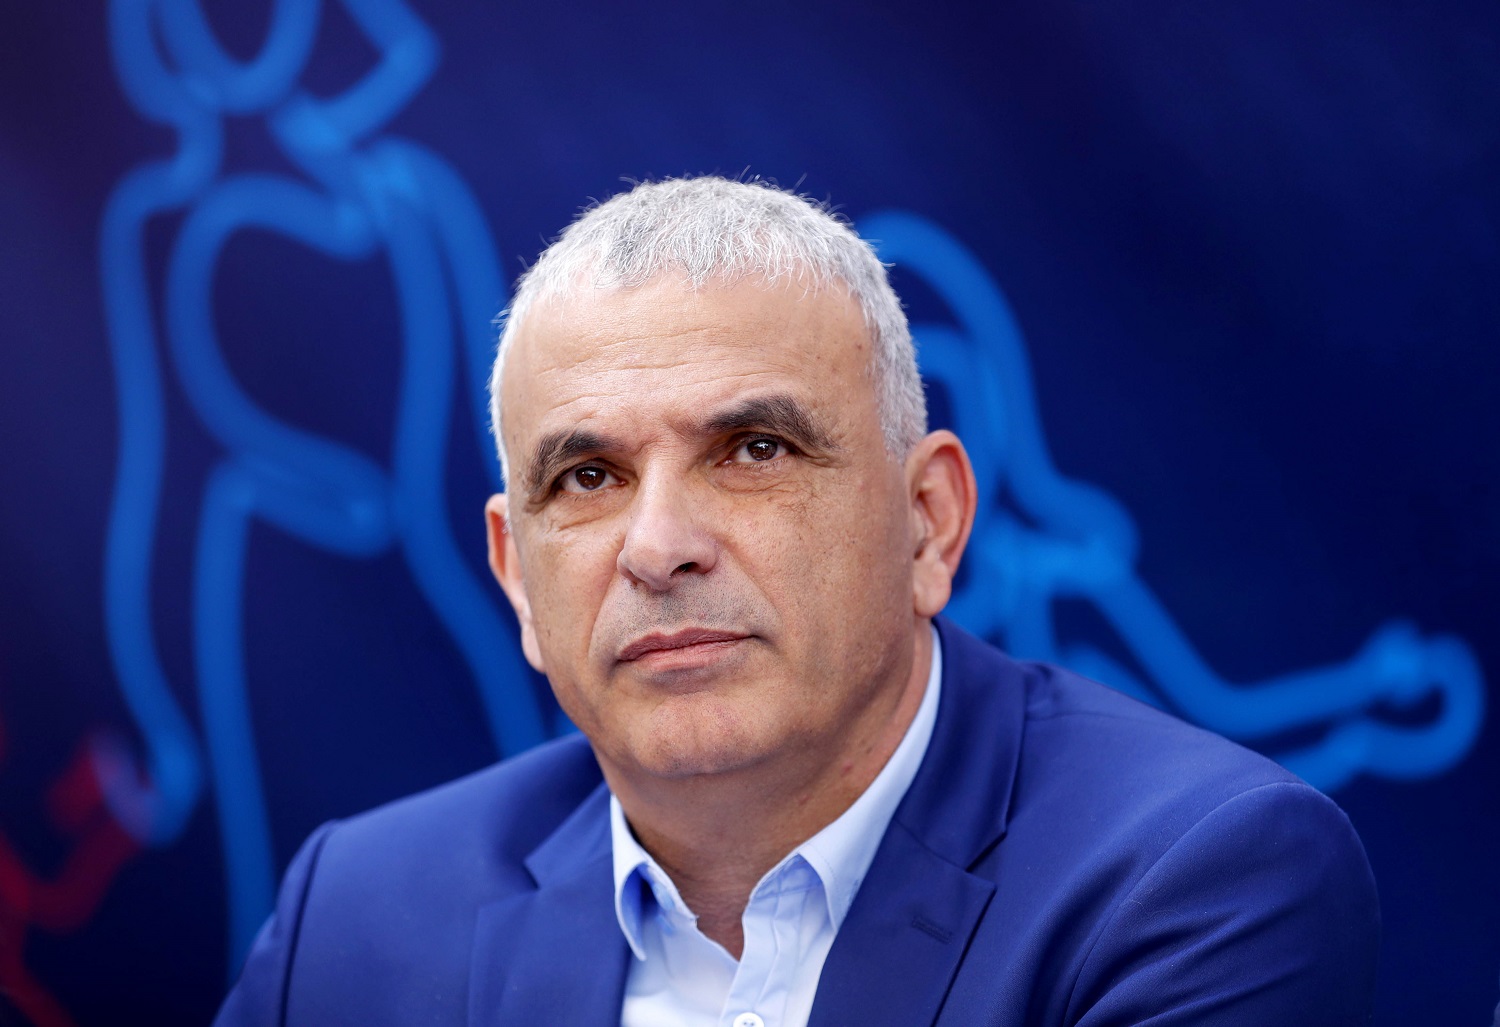 Moshe Kahlon gives a press conference in Tel Aviv in February 2019 (AFP)